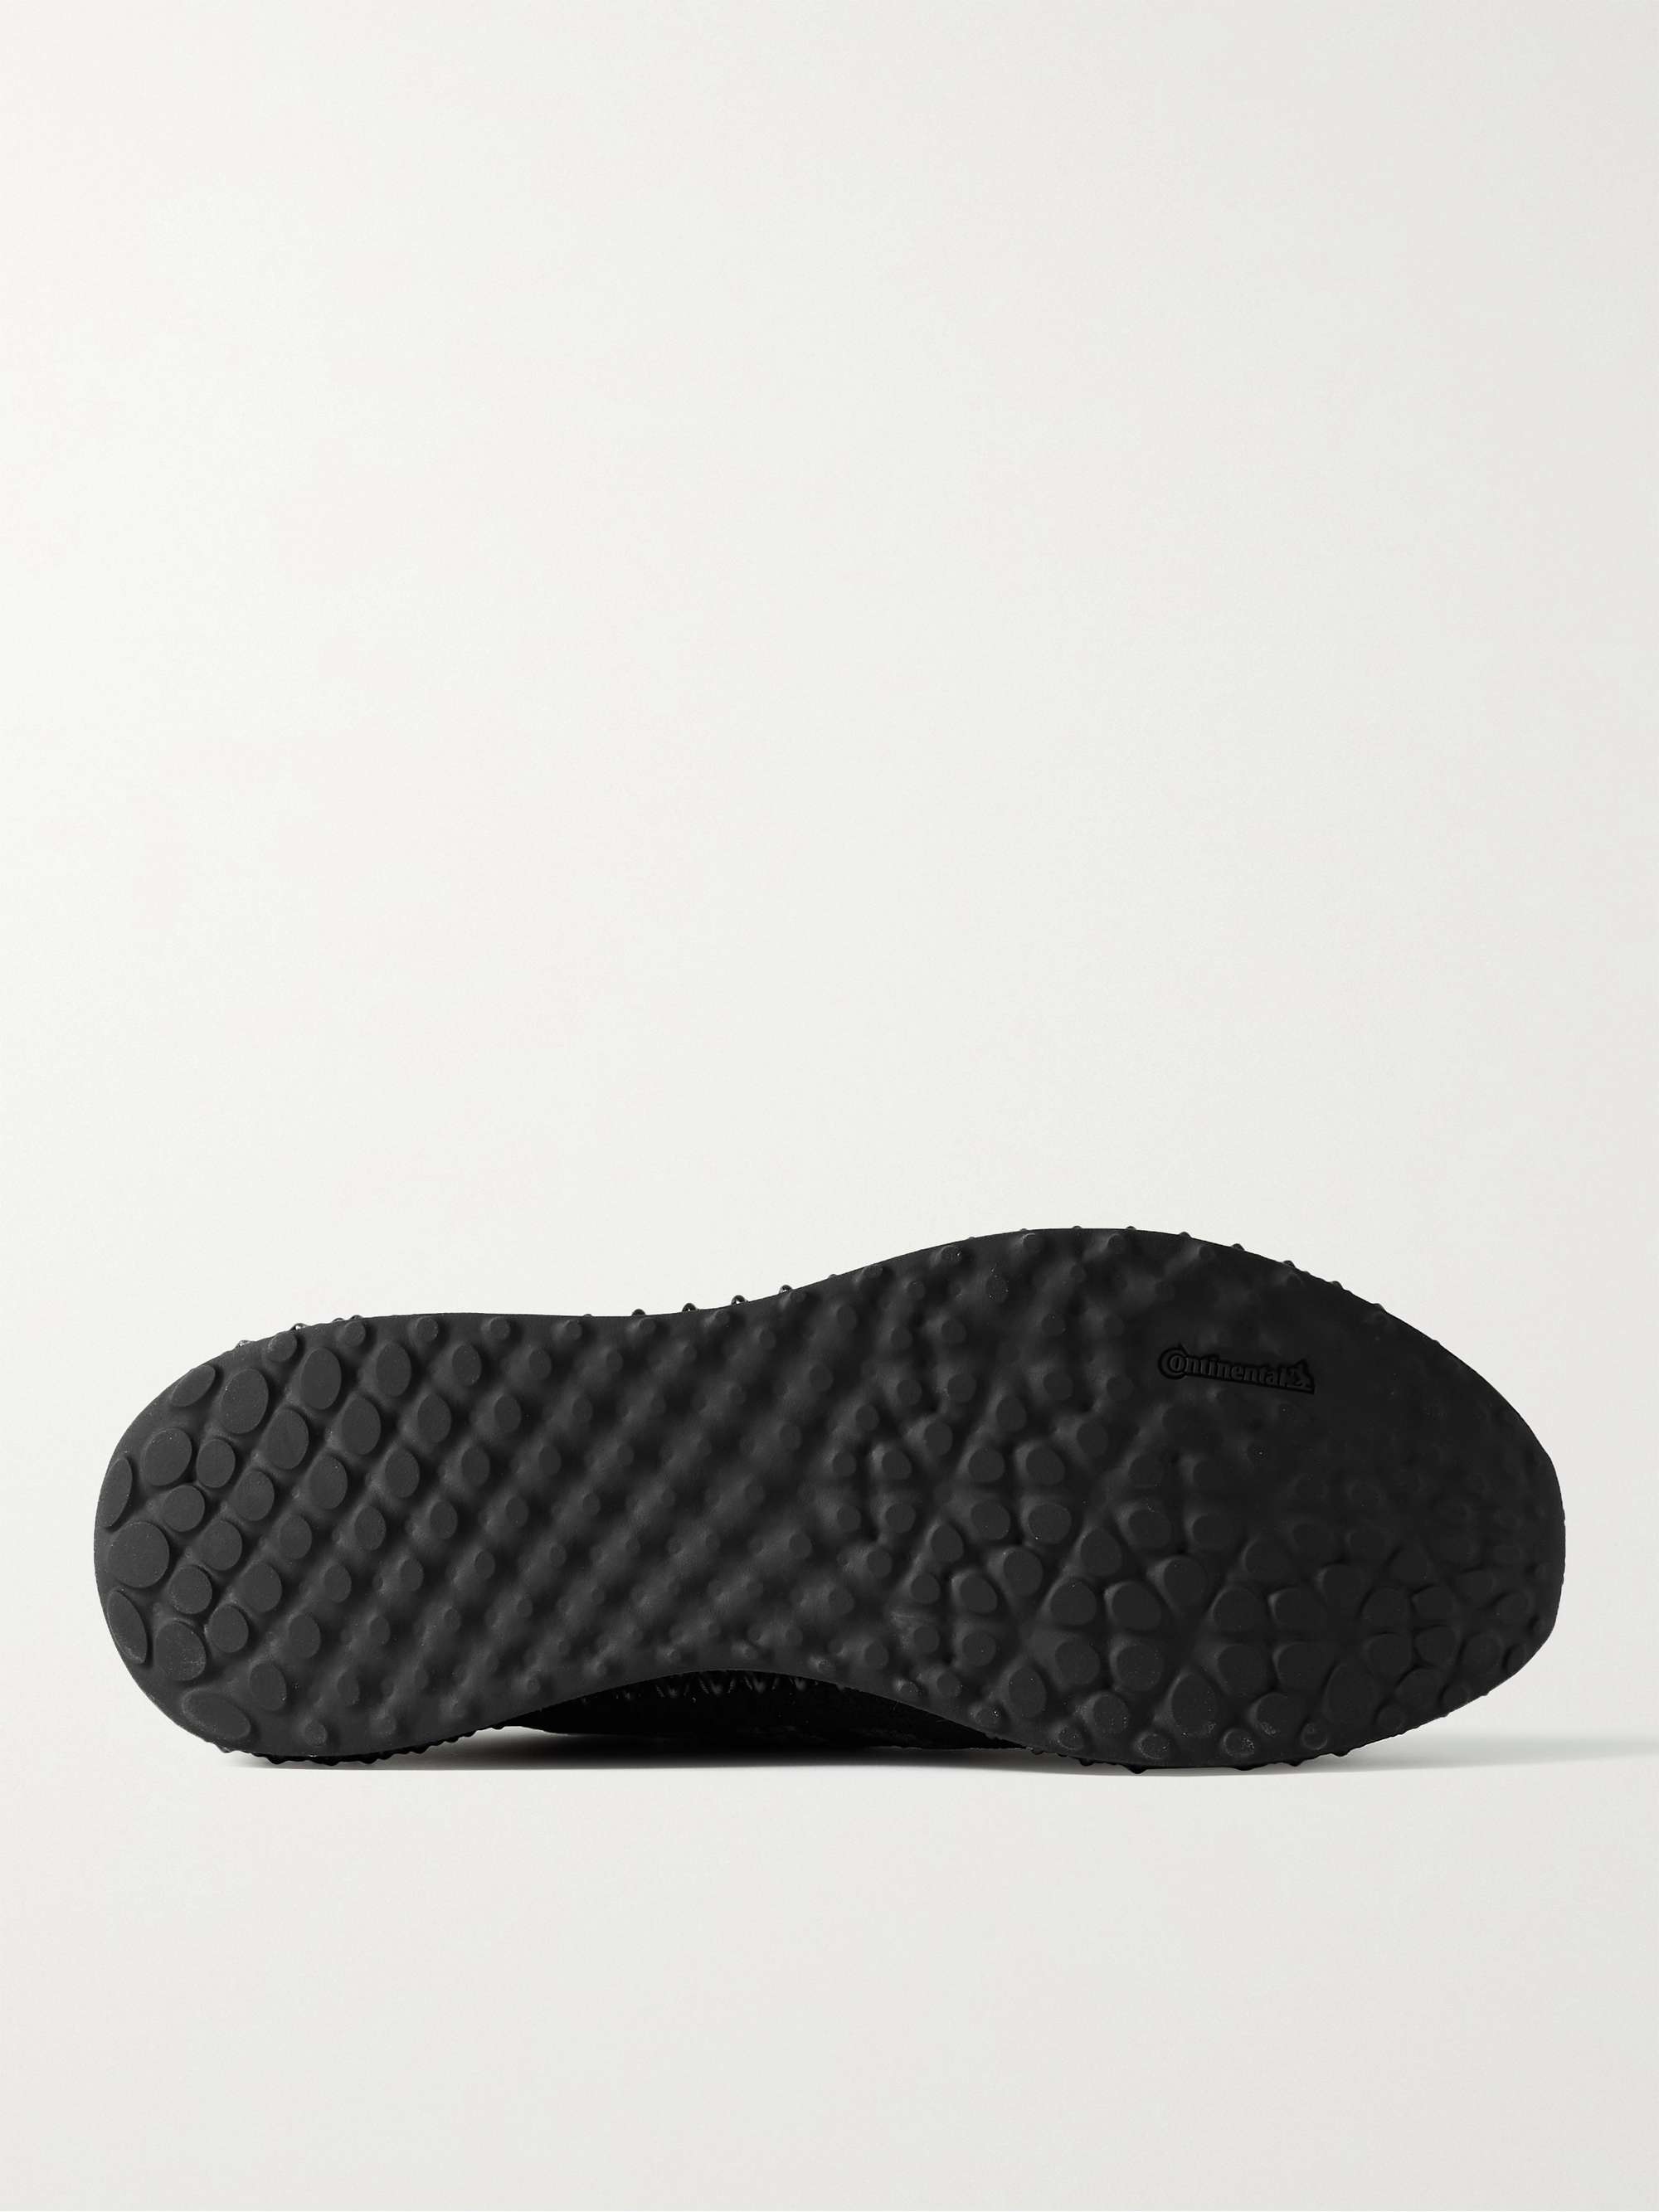 ADIDAS SPORT 4D Futurecraft Rubber-Trimmed Primeknit Sneakers